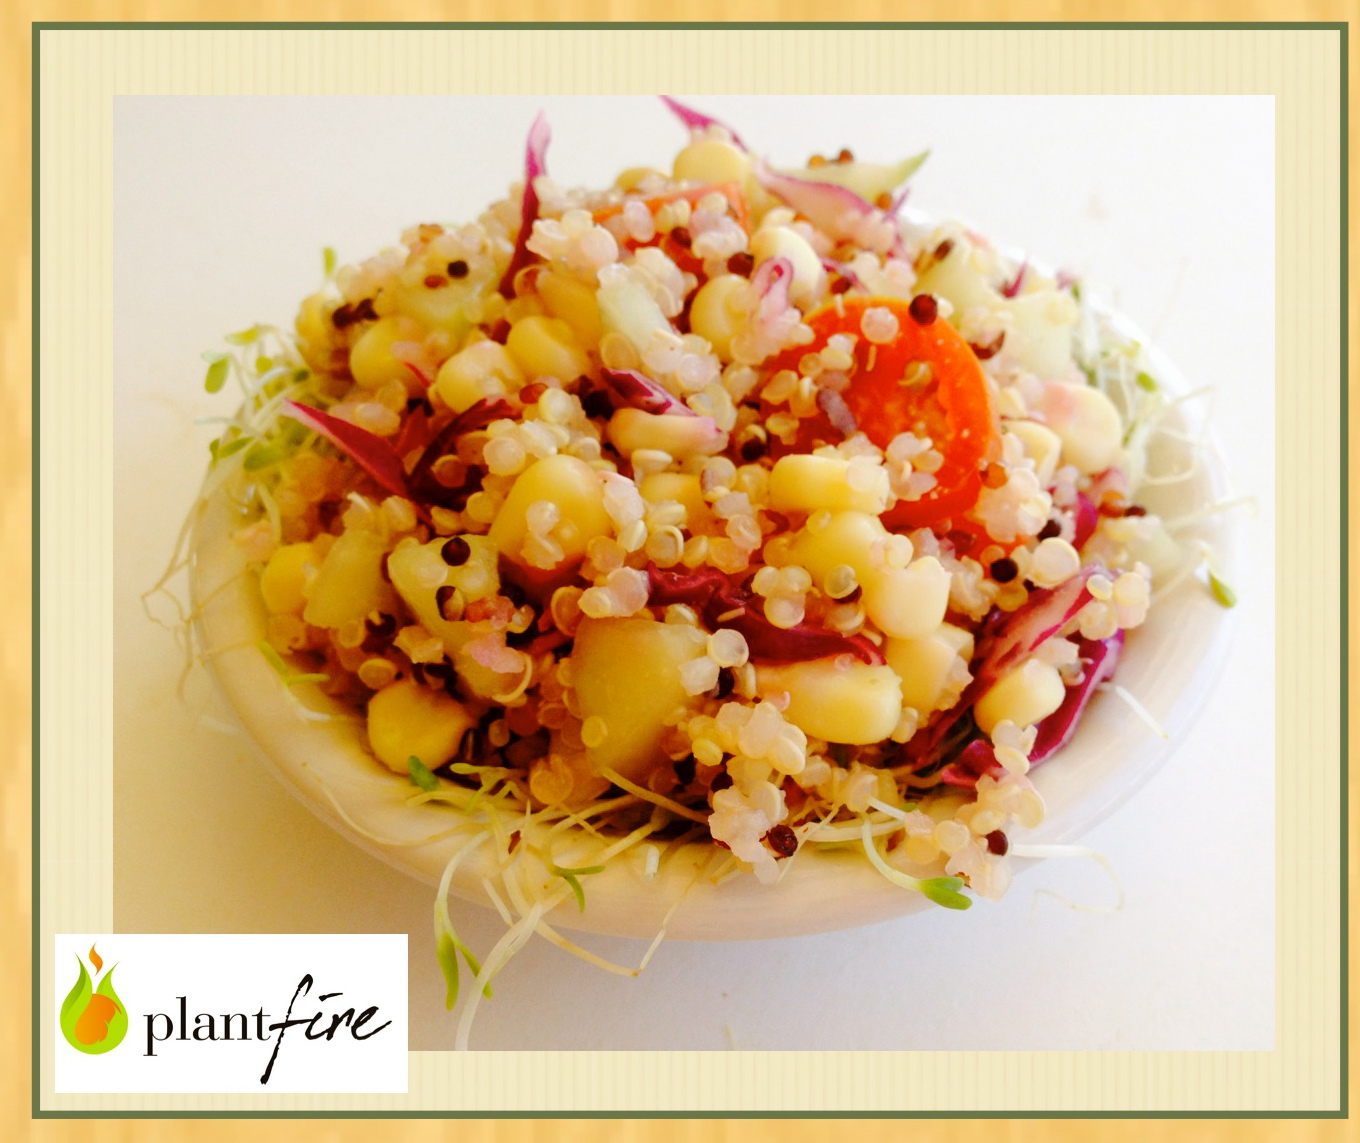 Meatless Monday – Festive Quinoa Salad